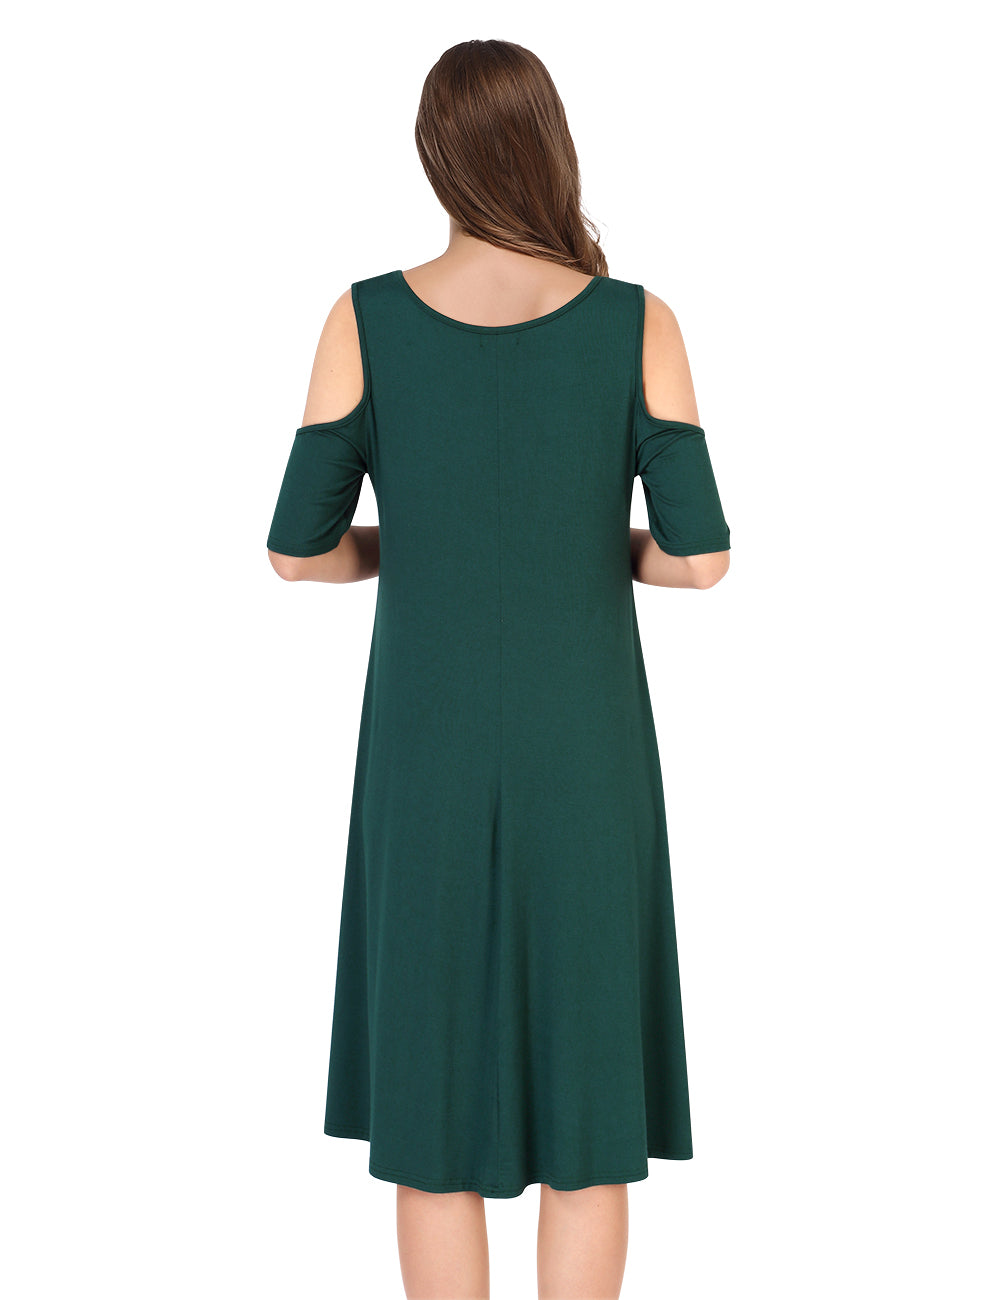 Women's Cold Shoulder Short Sleeve Solid Color Loose Casual Dress